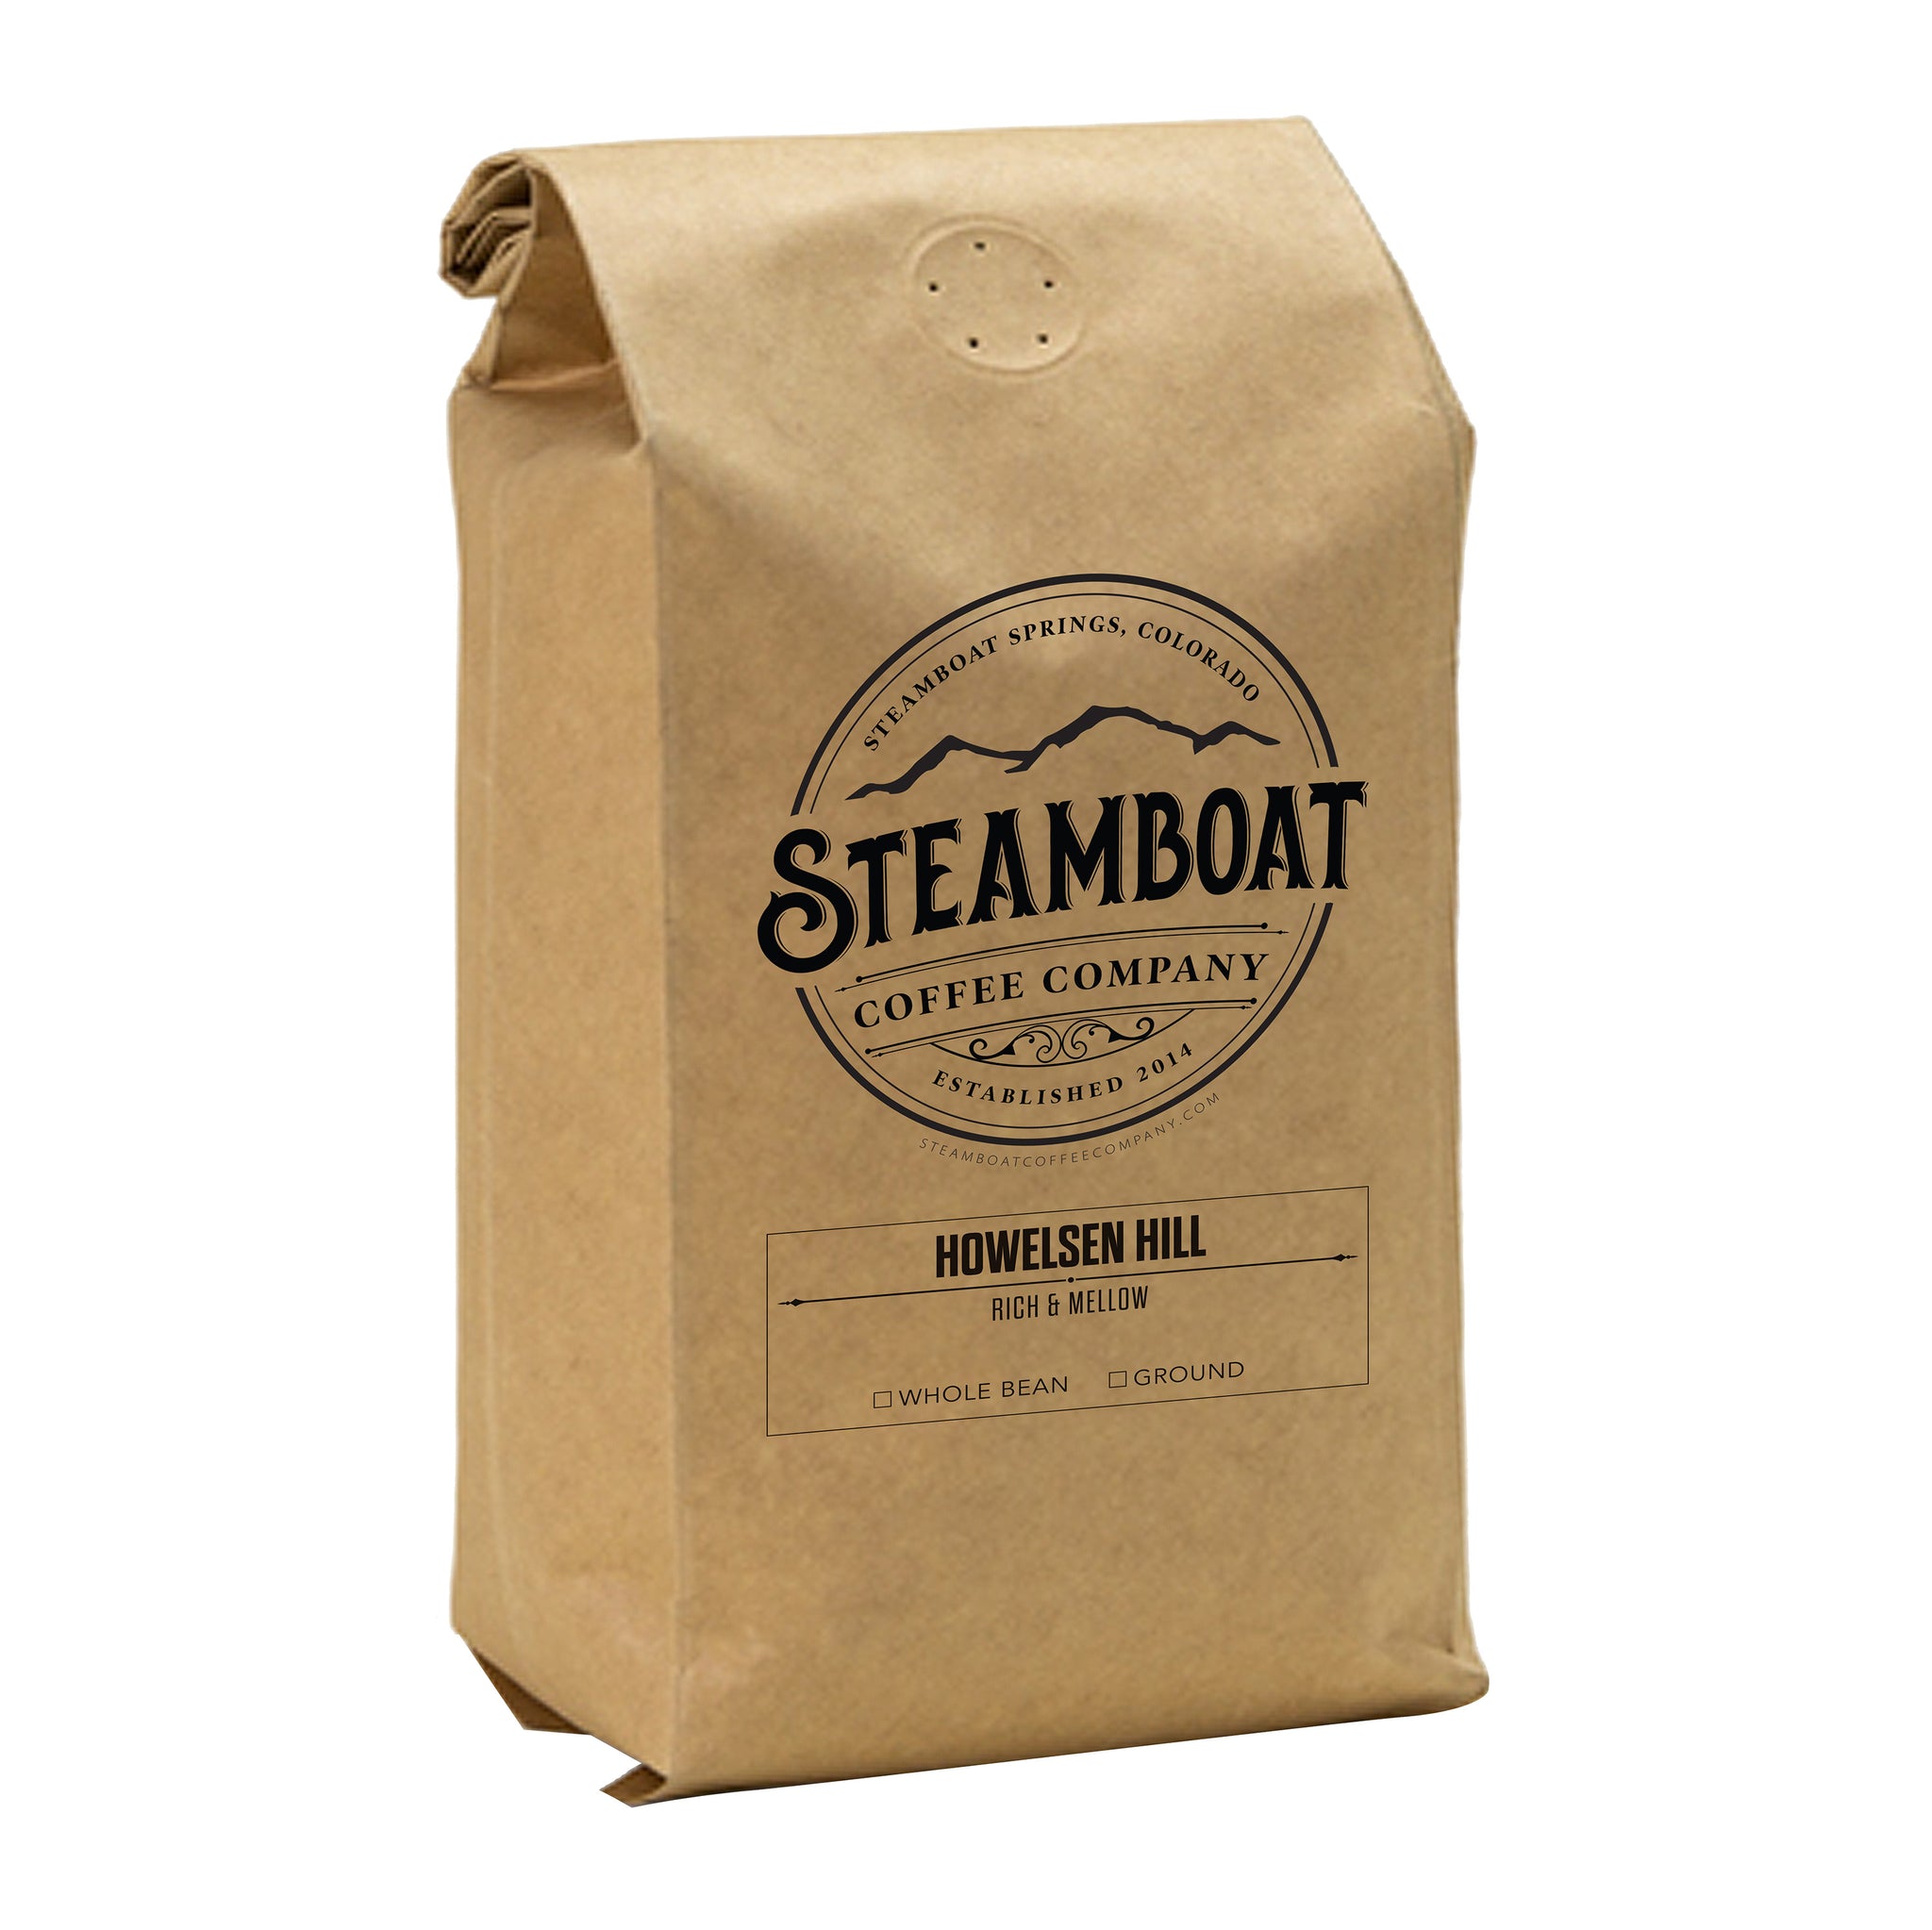 Company Steamboat Coffee